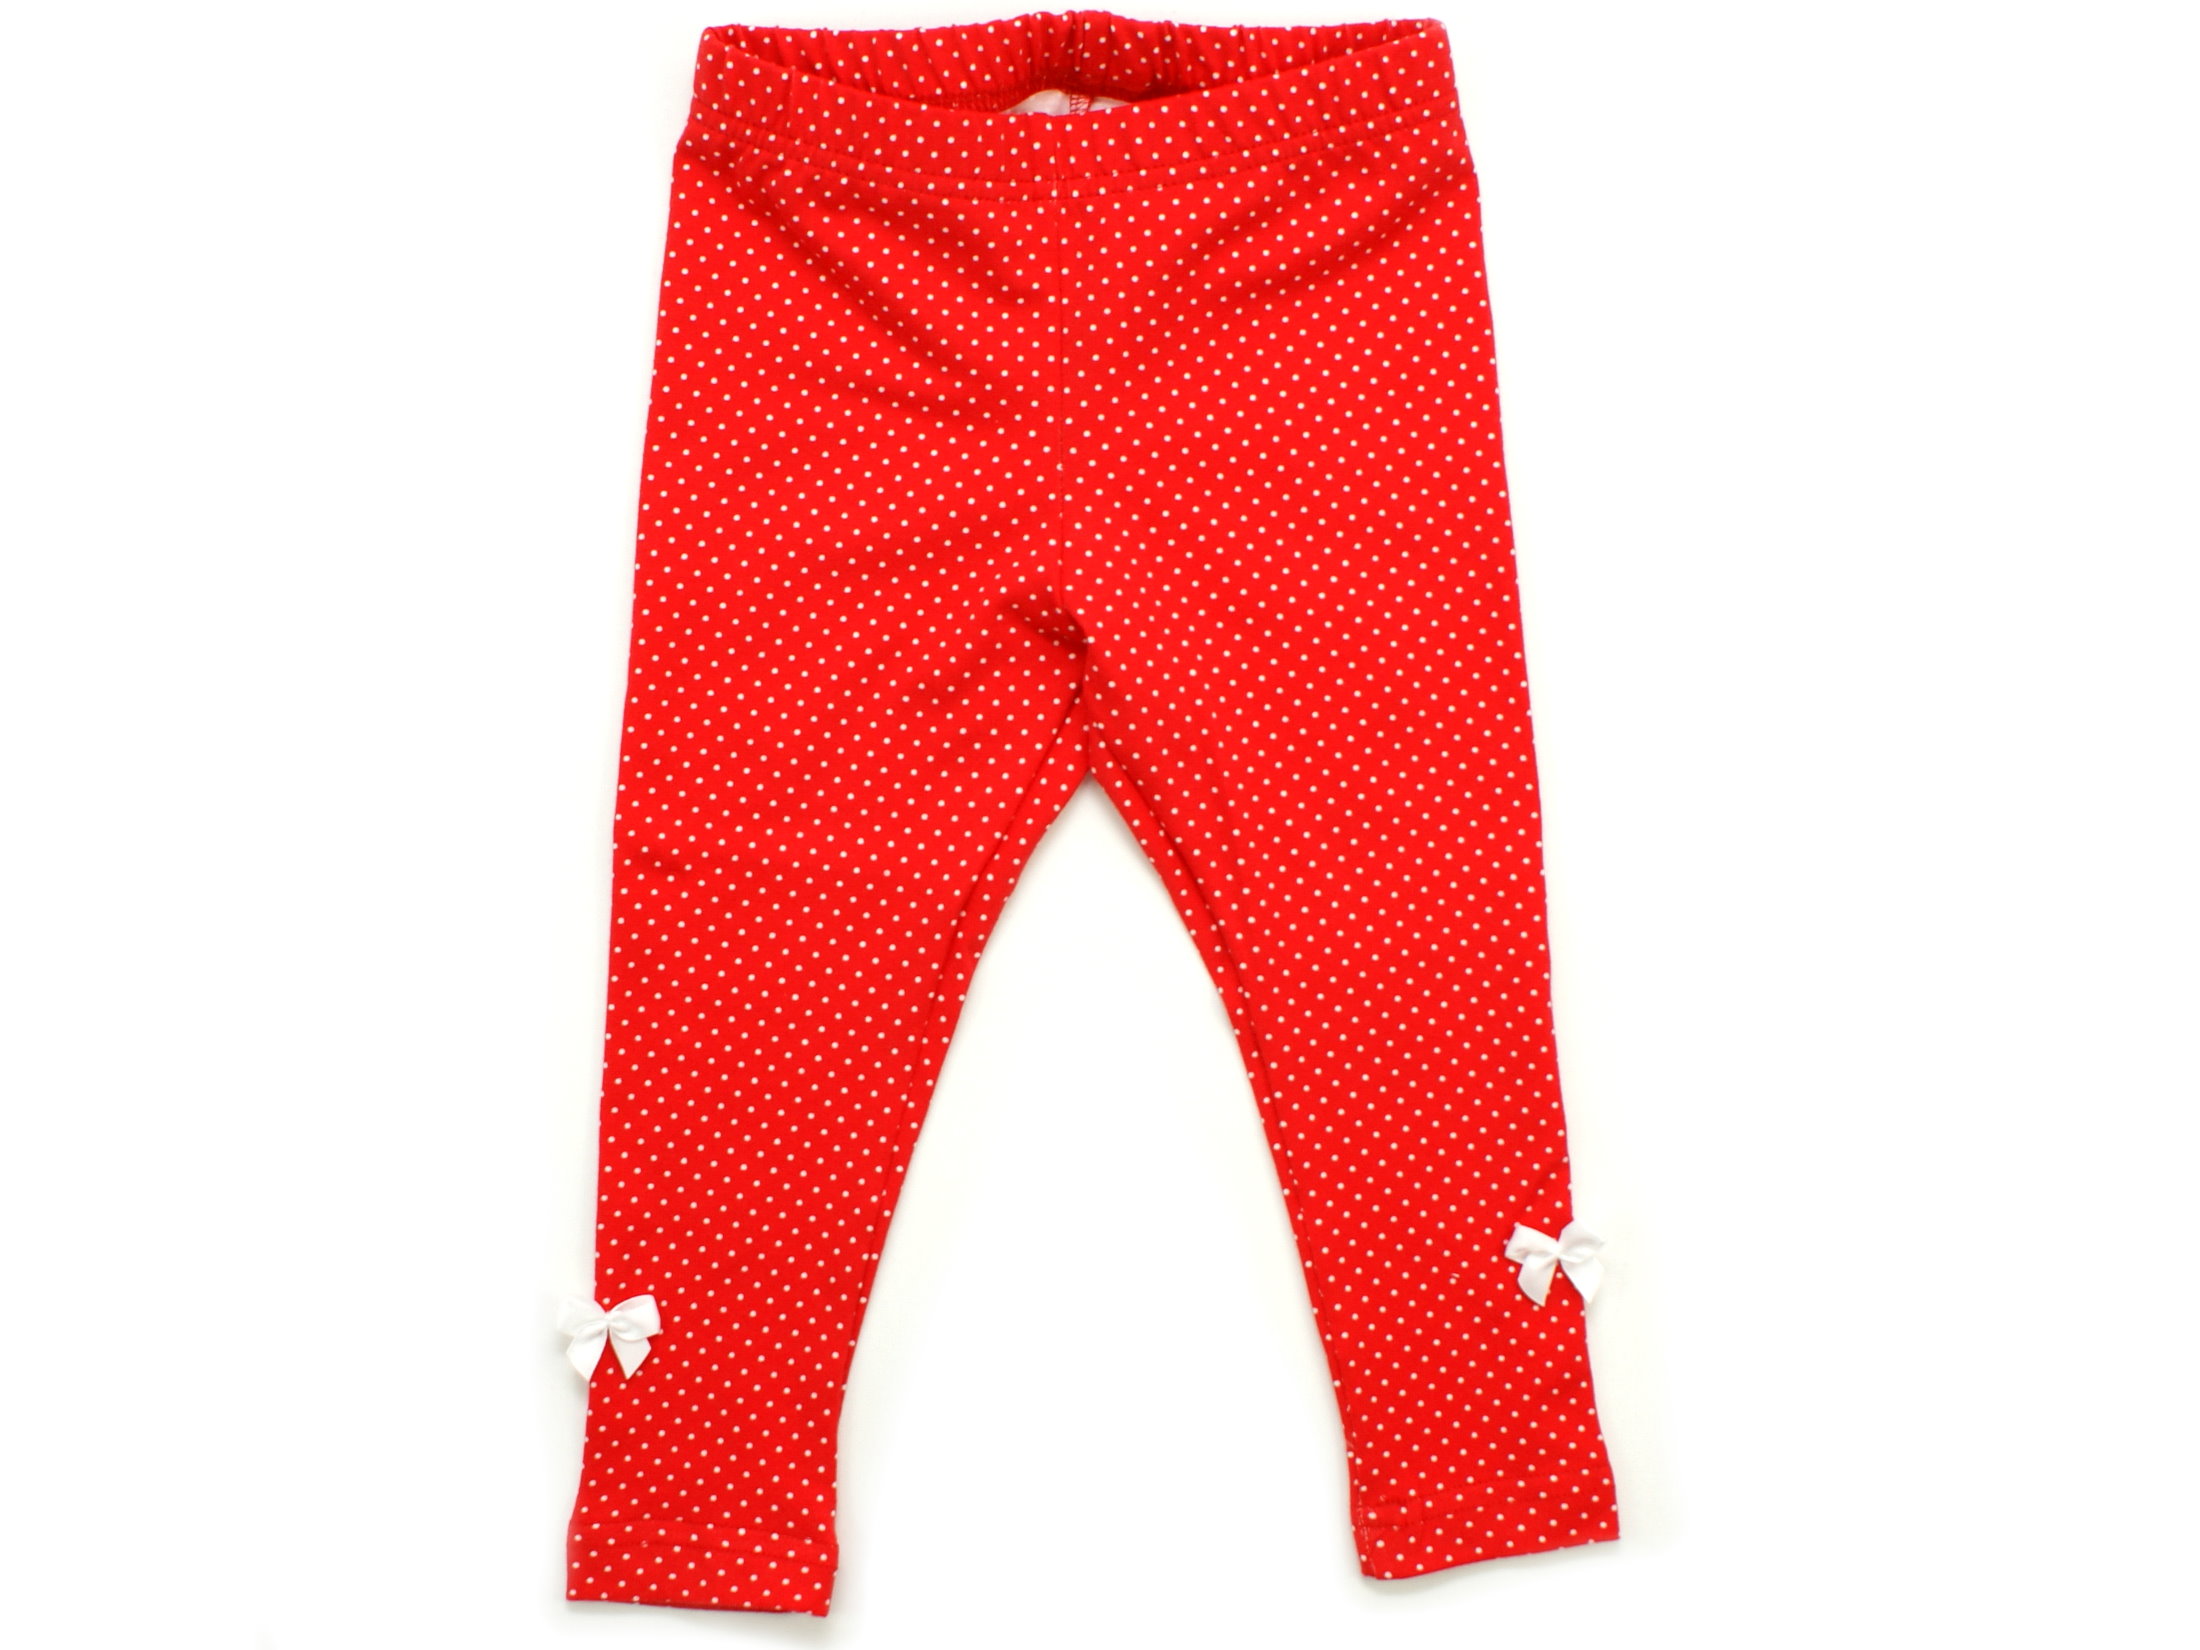 Kinder Leggings "Punkte" rot weiß